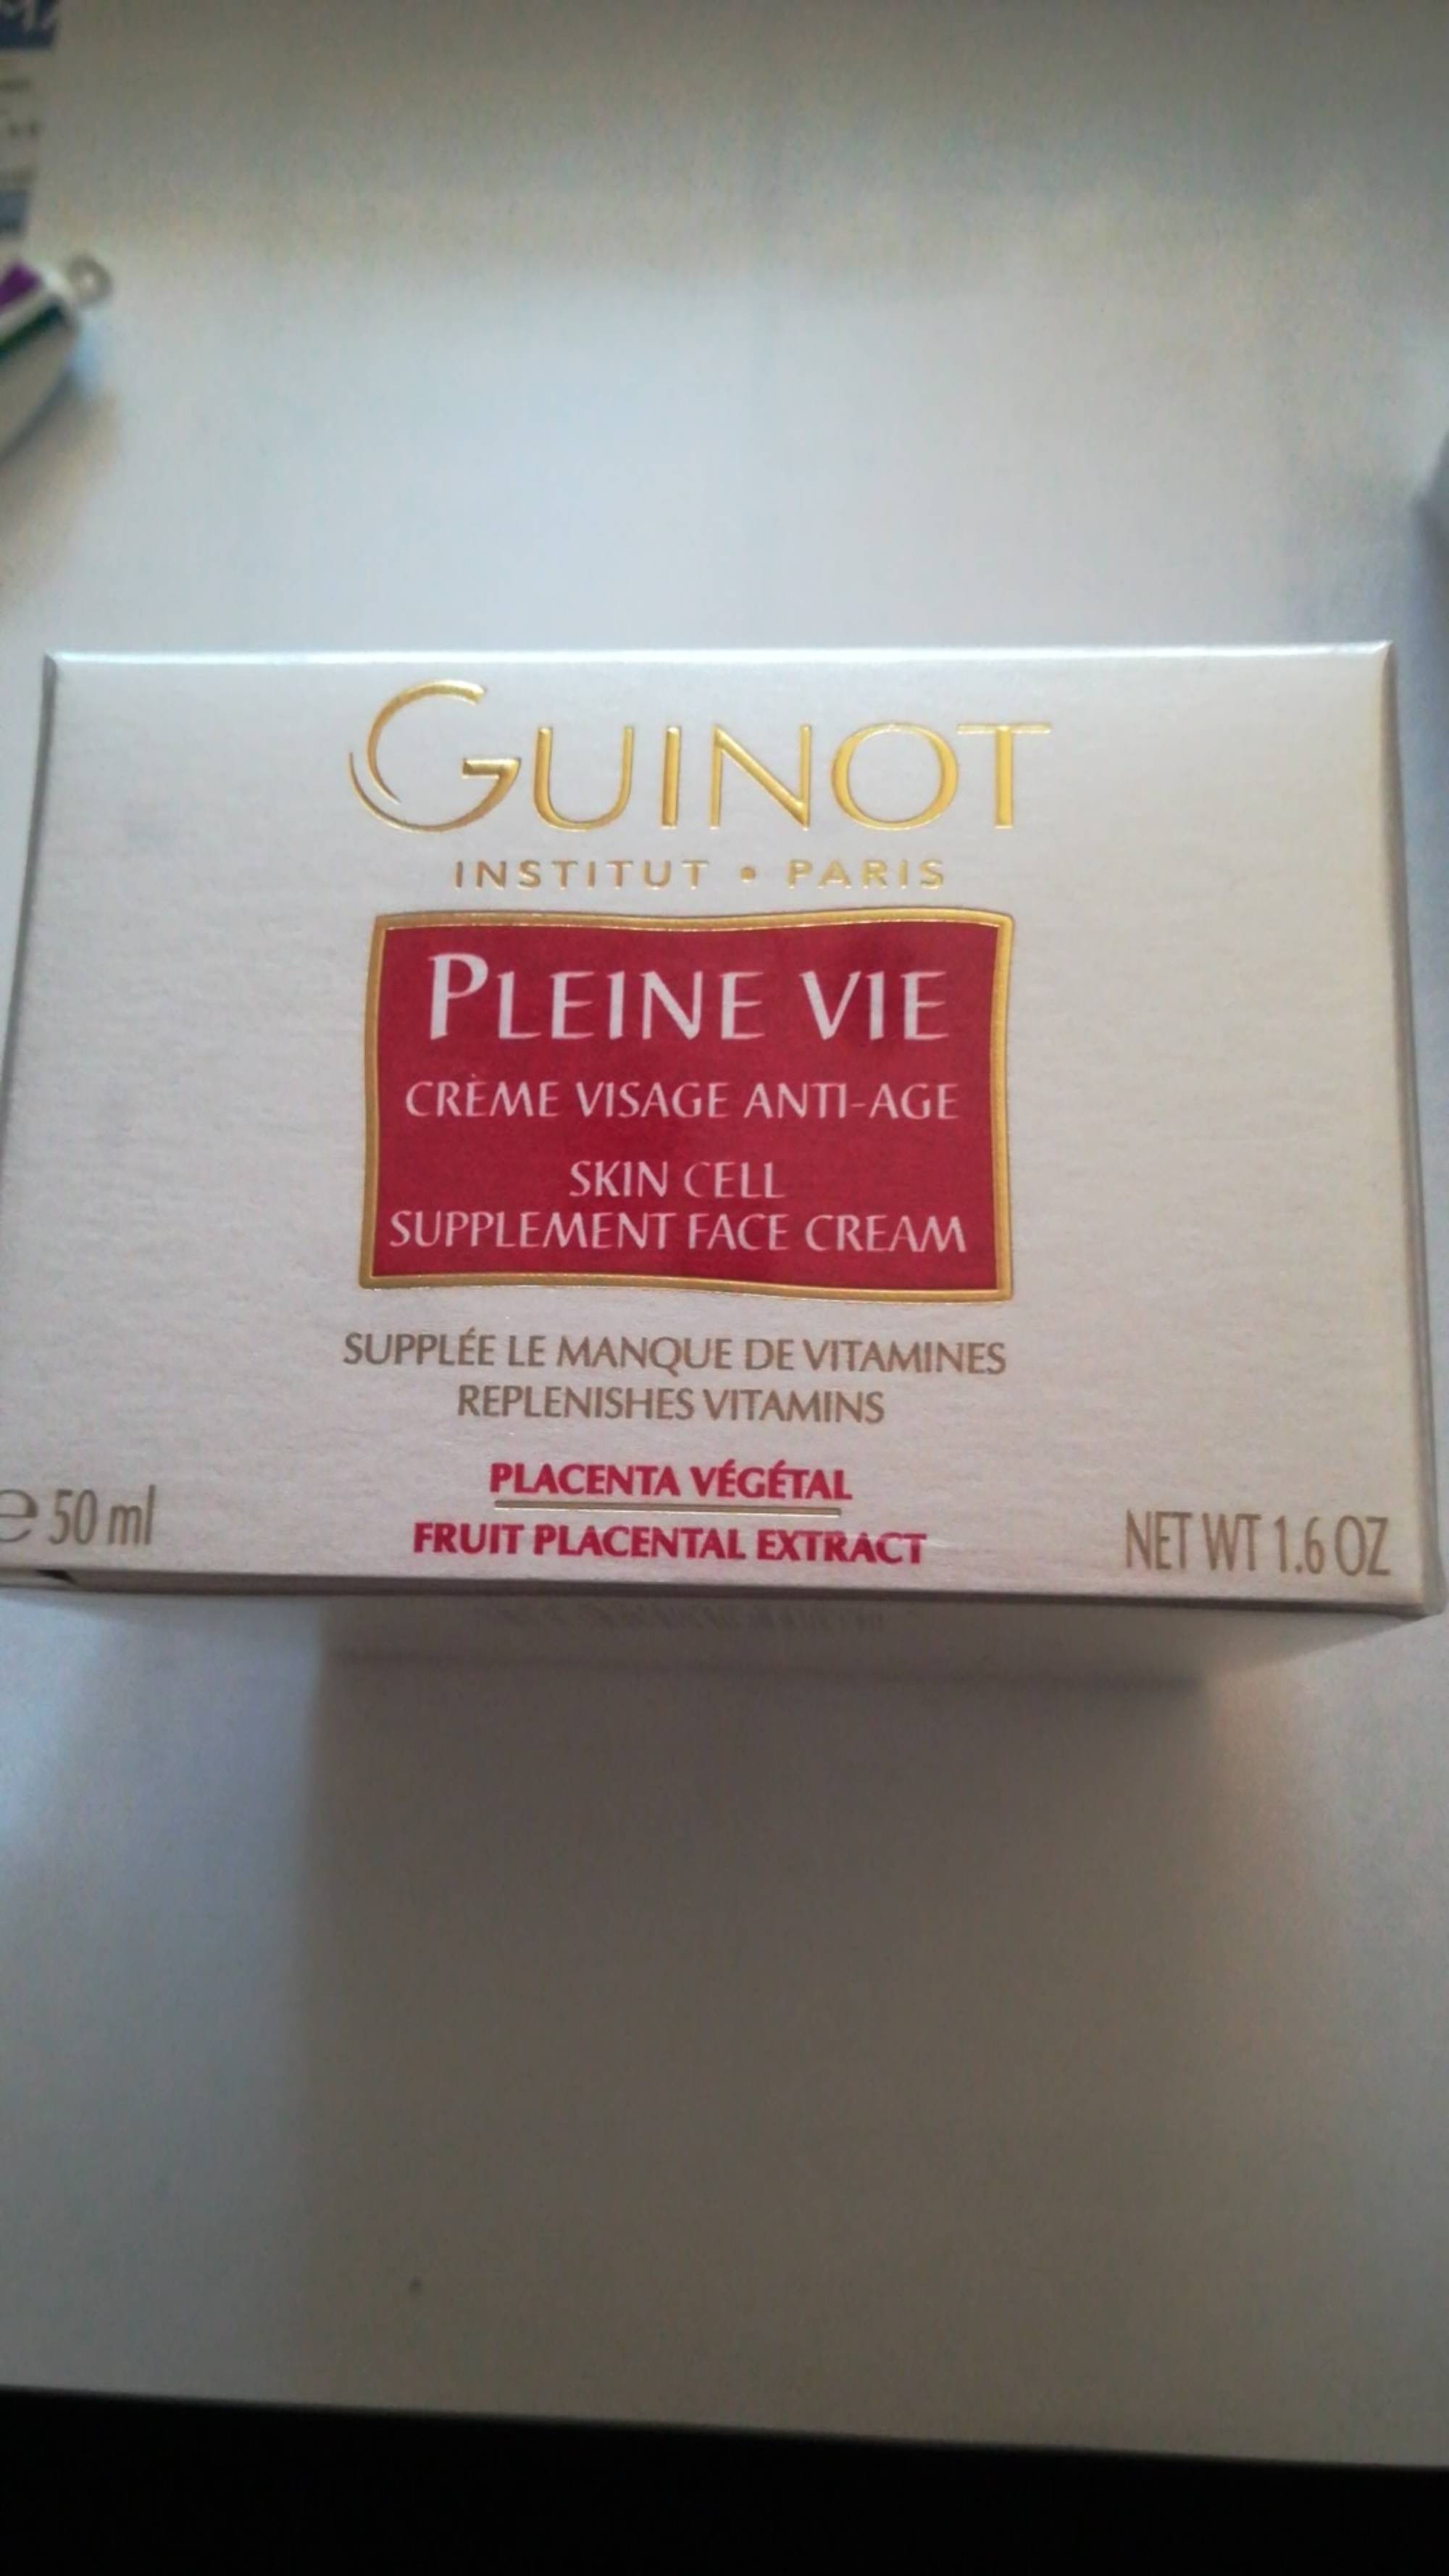 GUINOT - Pleine vie - Crème visage anti-âge